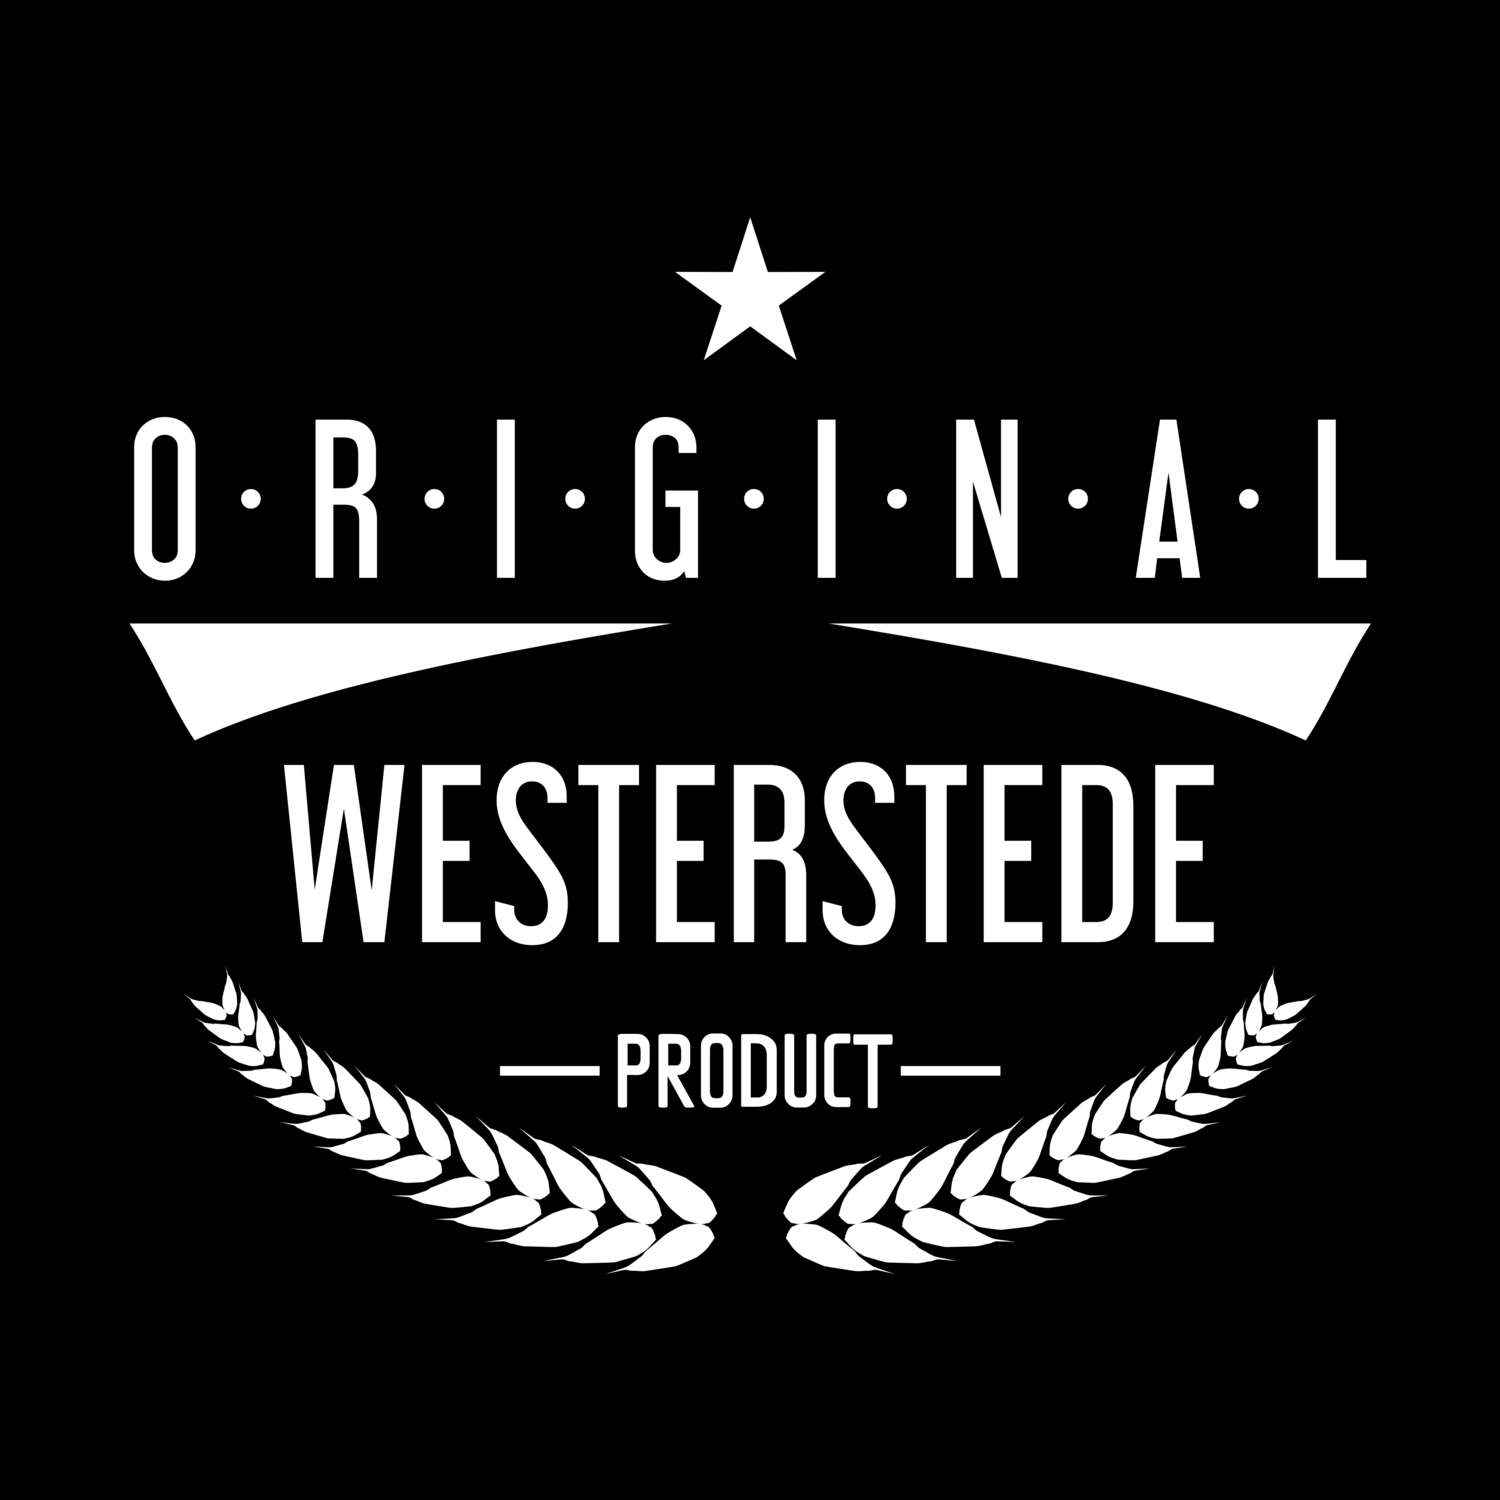 Westerstede T-Shirt »Original Product«